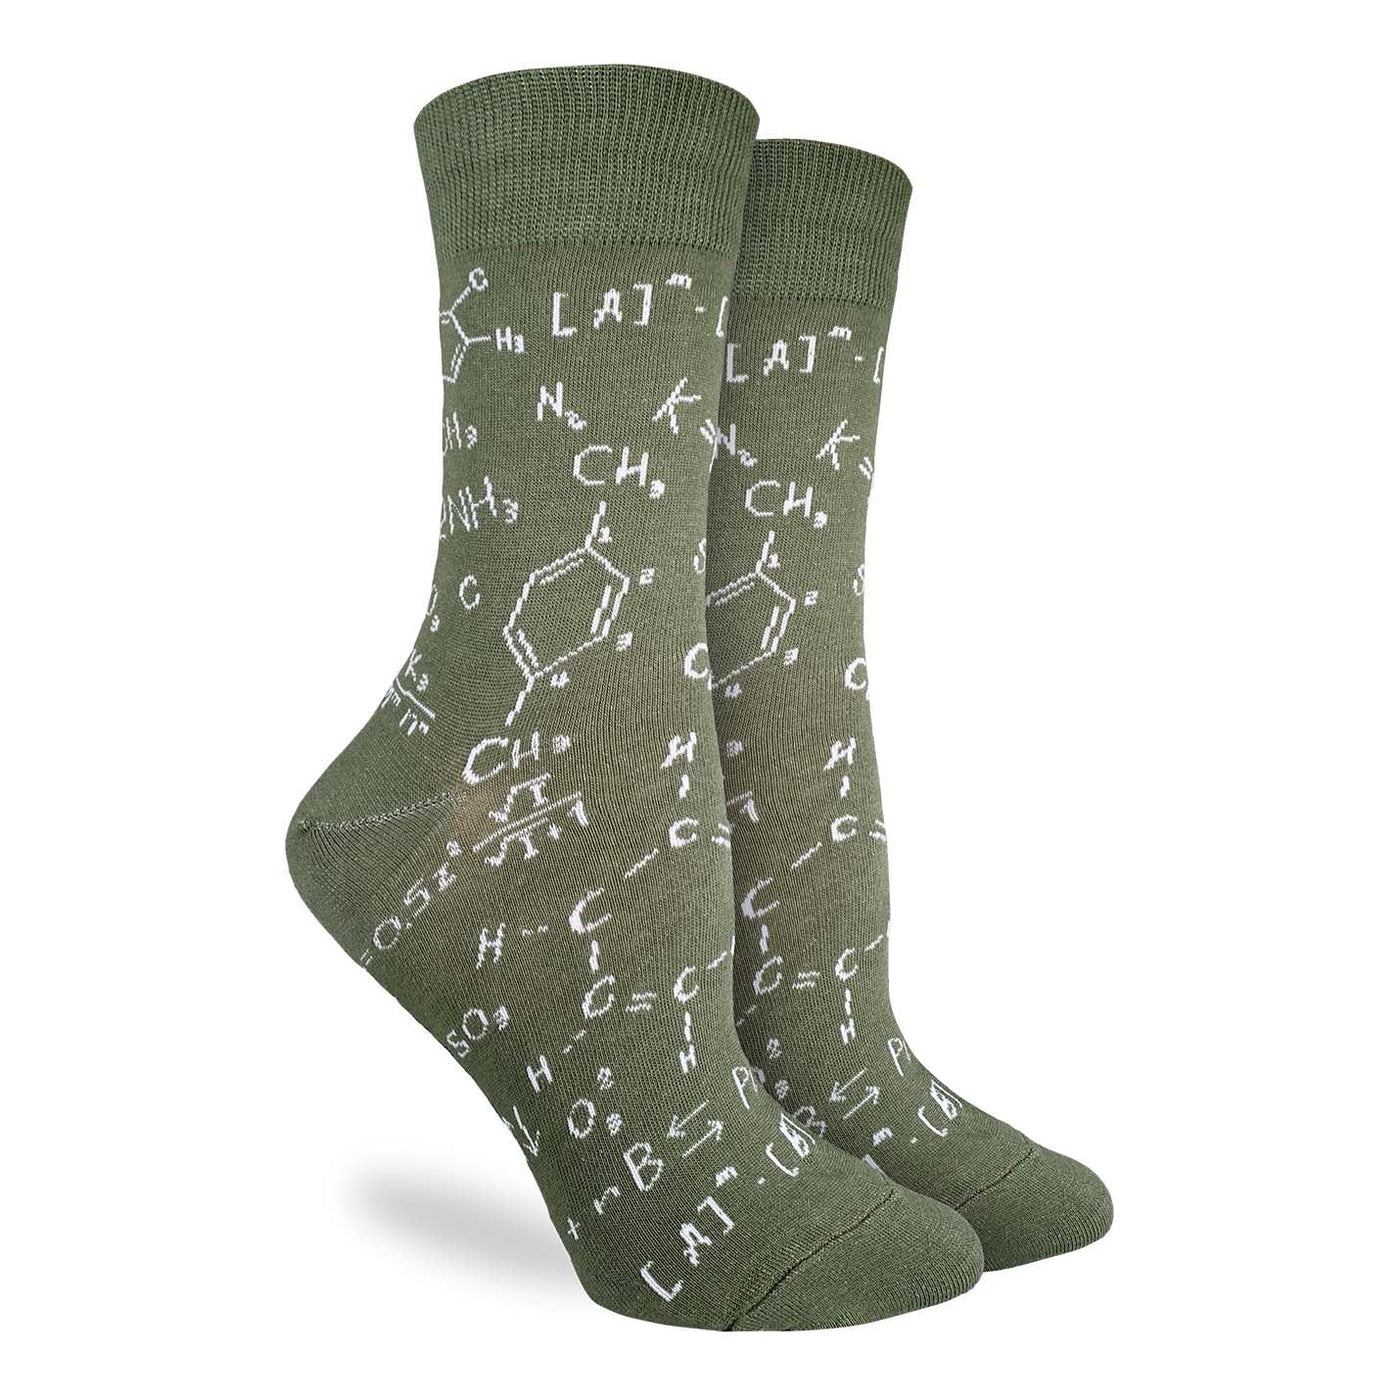 "Chemistry Formulas" Cotton Crew Socks by Good Luck Sock